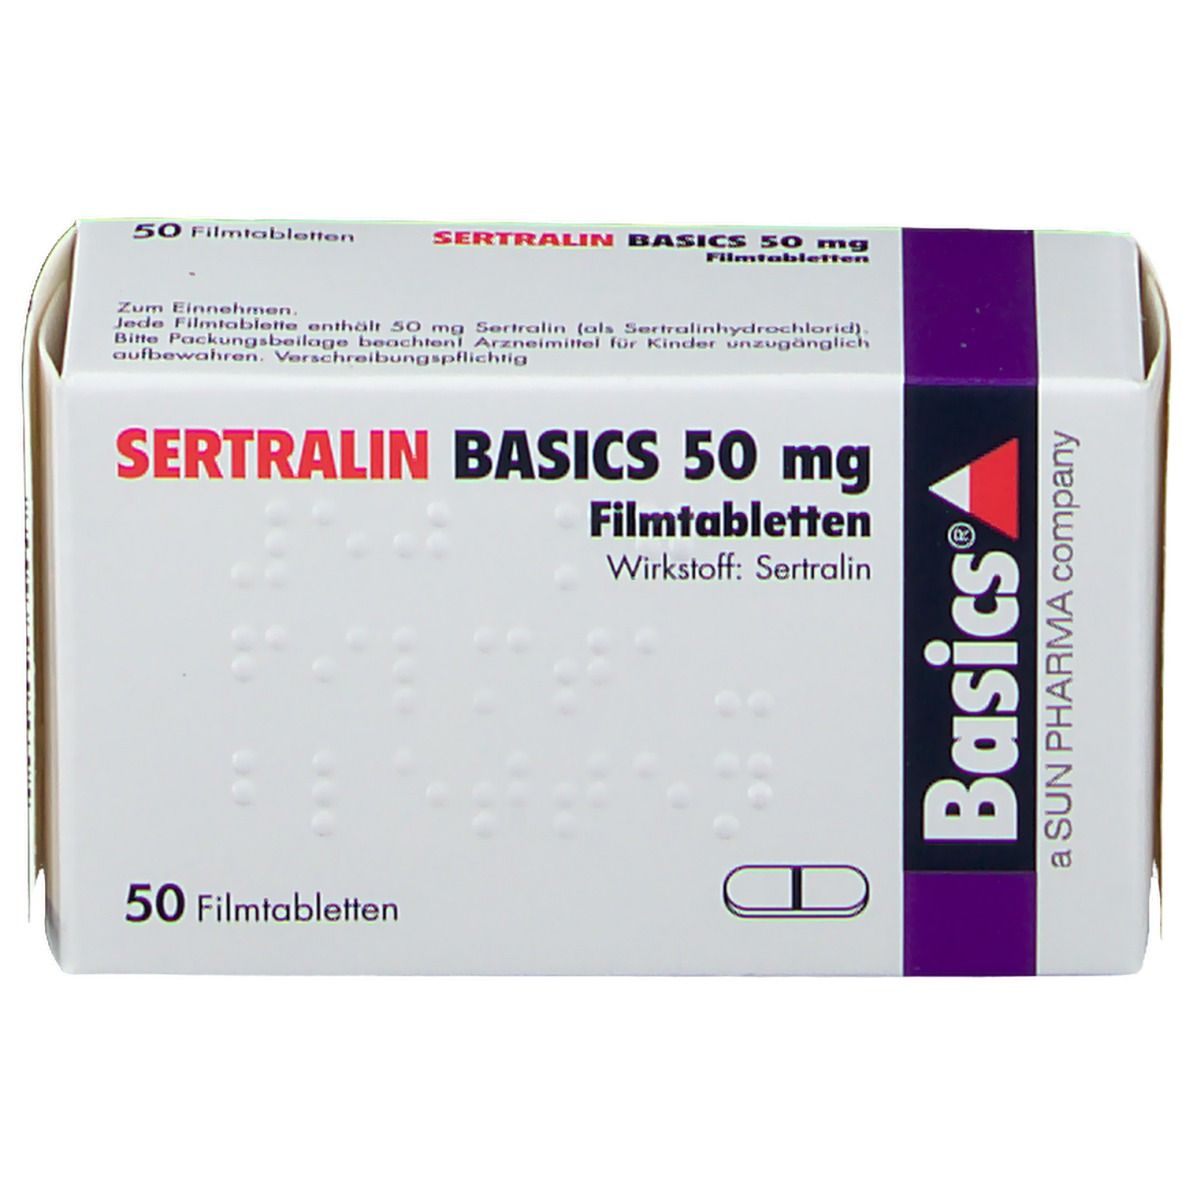 SERTRALIN BASICS 50 mg